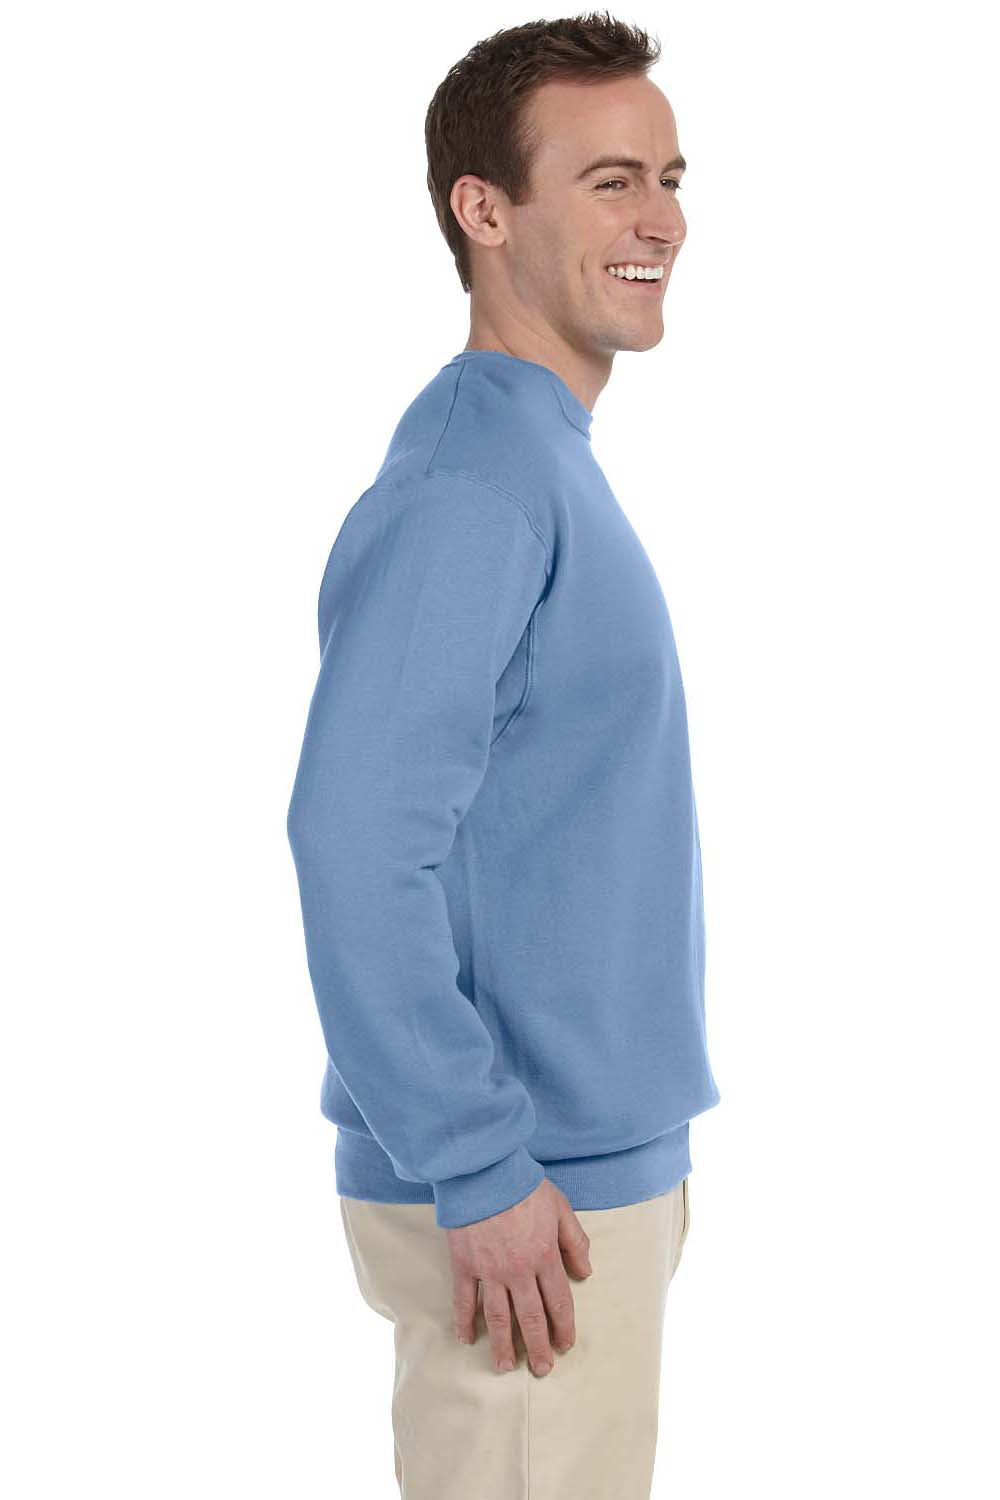 Jerzees 562 Mens NuBlend Fleece Crewneck Sweatshirt Light Blue Side